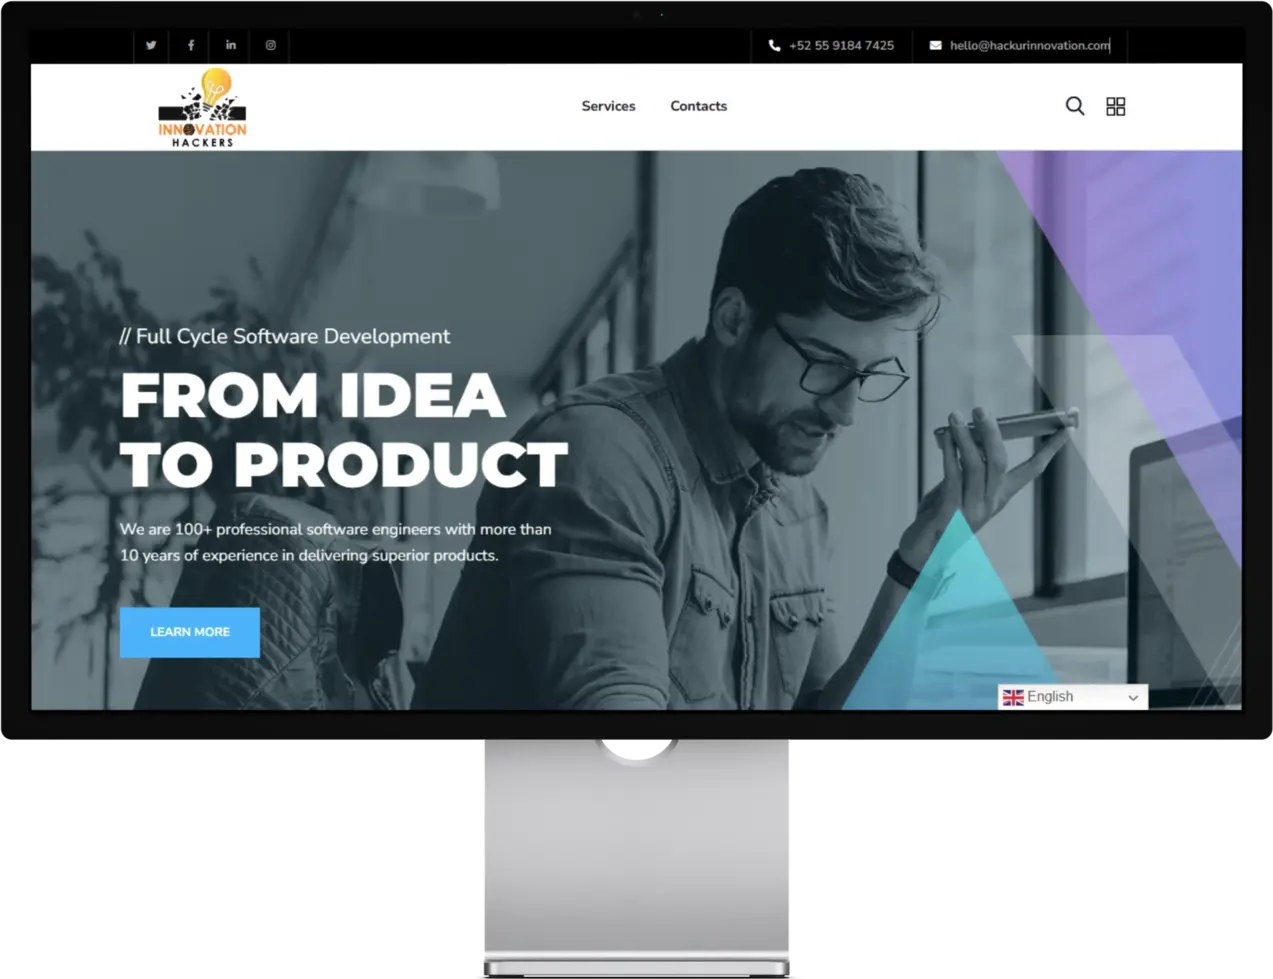 Hack ur Innovation website screenshot